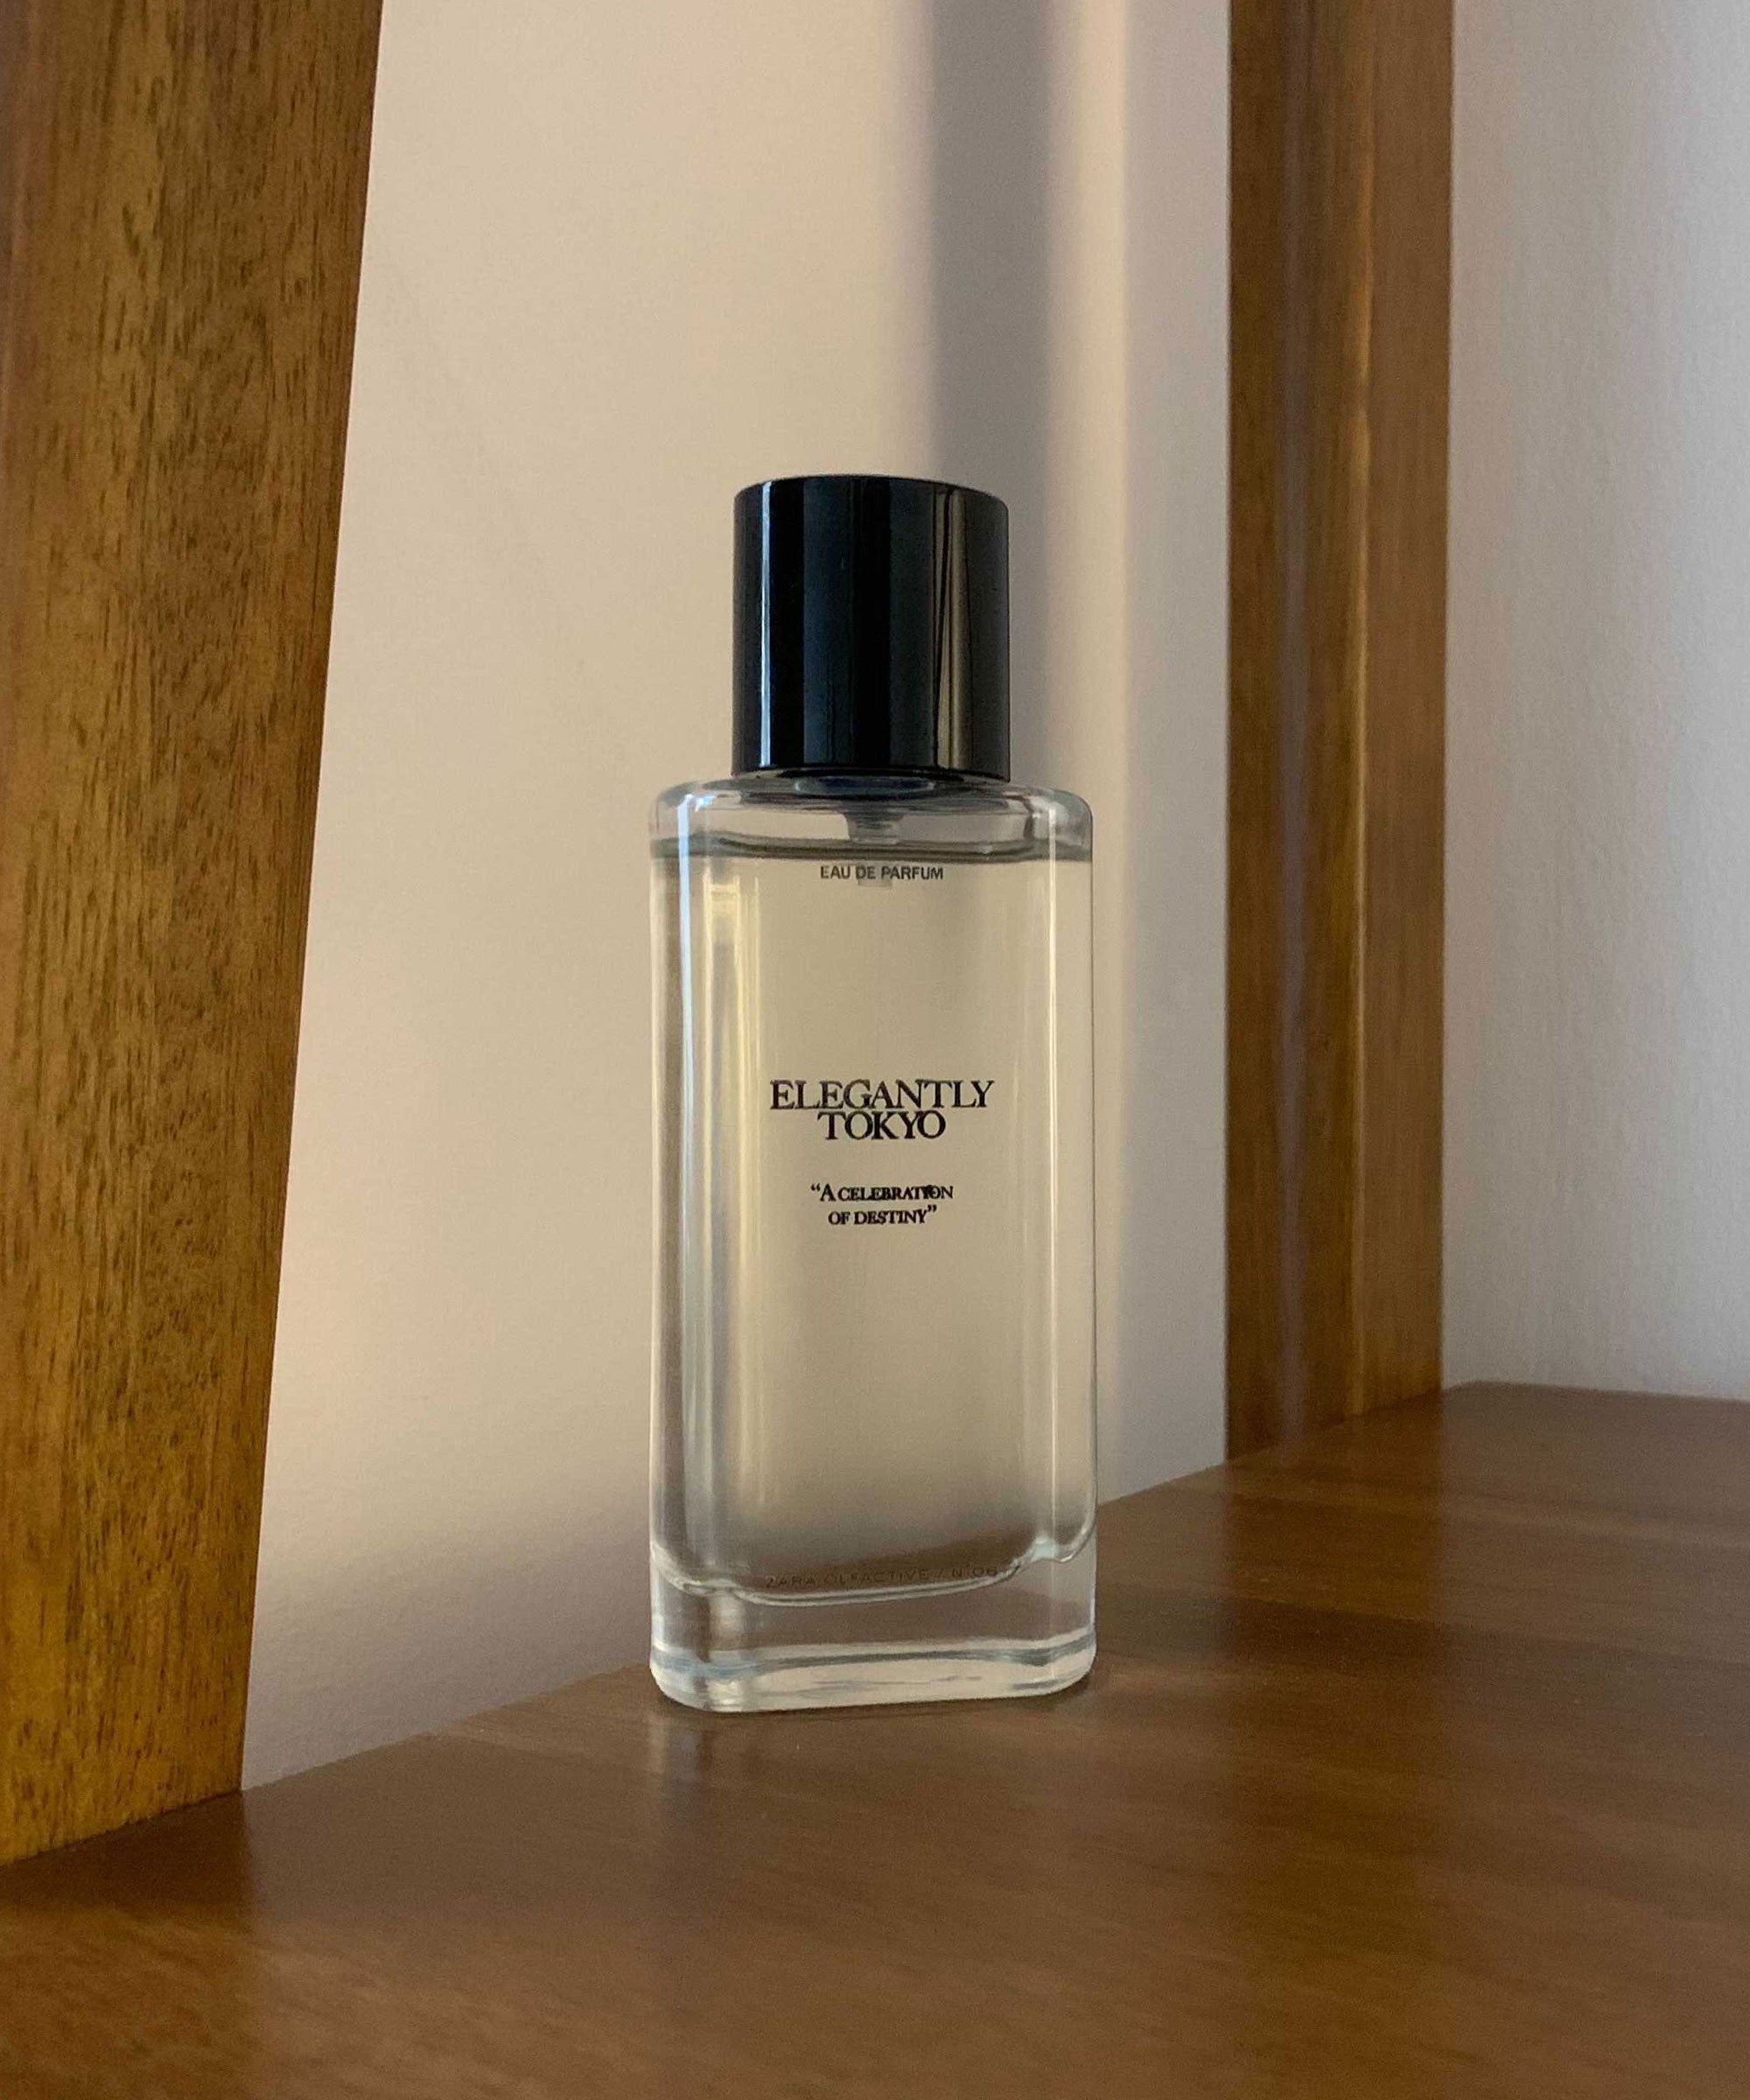 Are Zara Fragrances Any Good? – Purely Fragrance